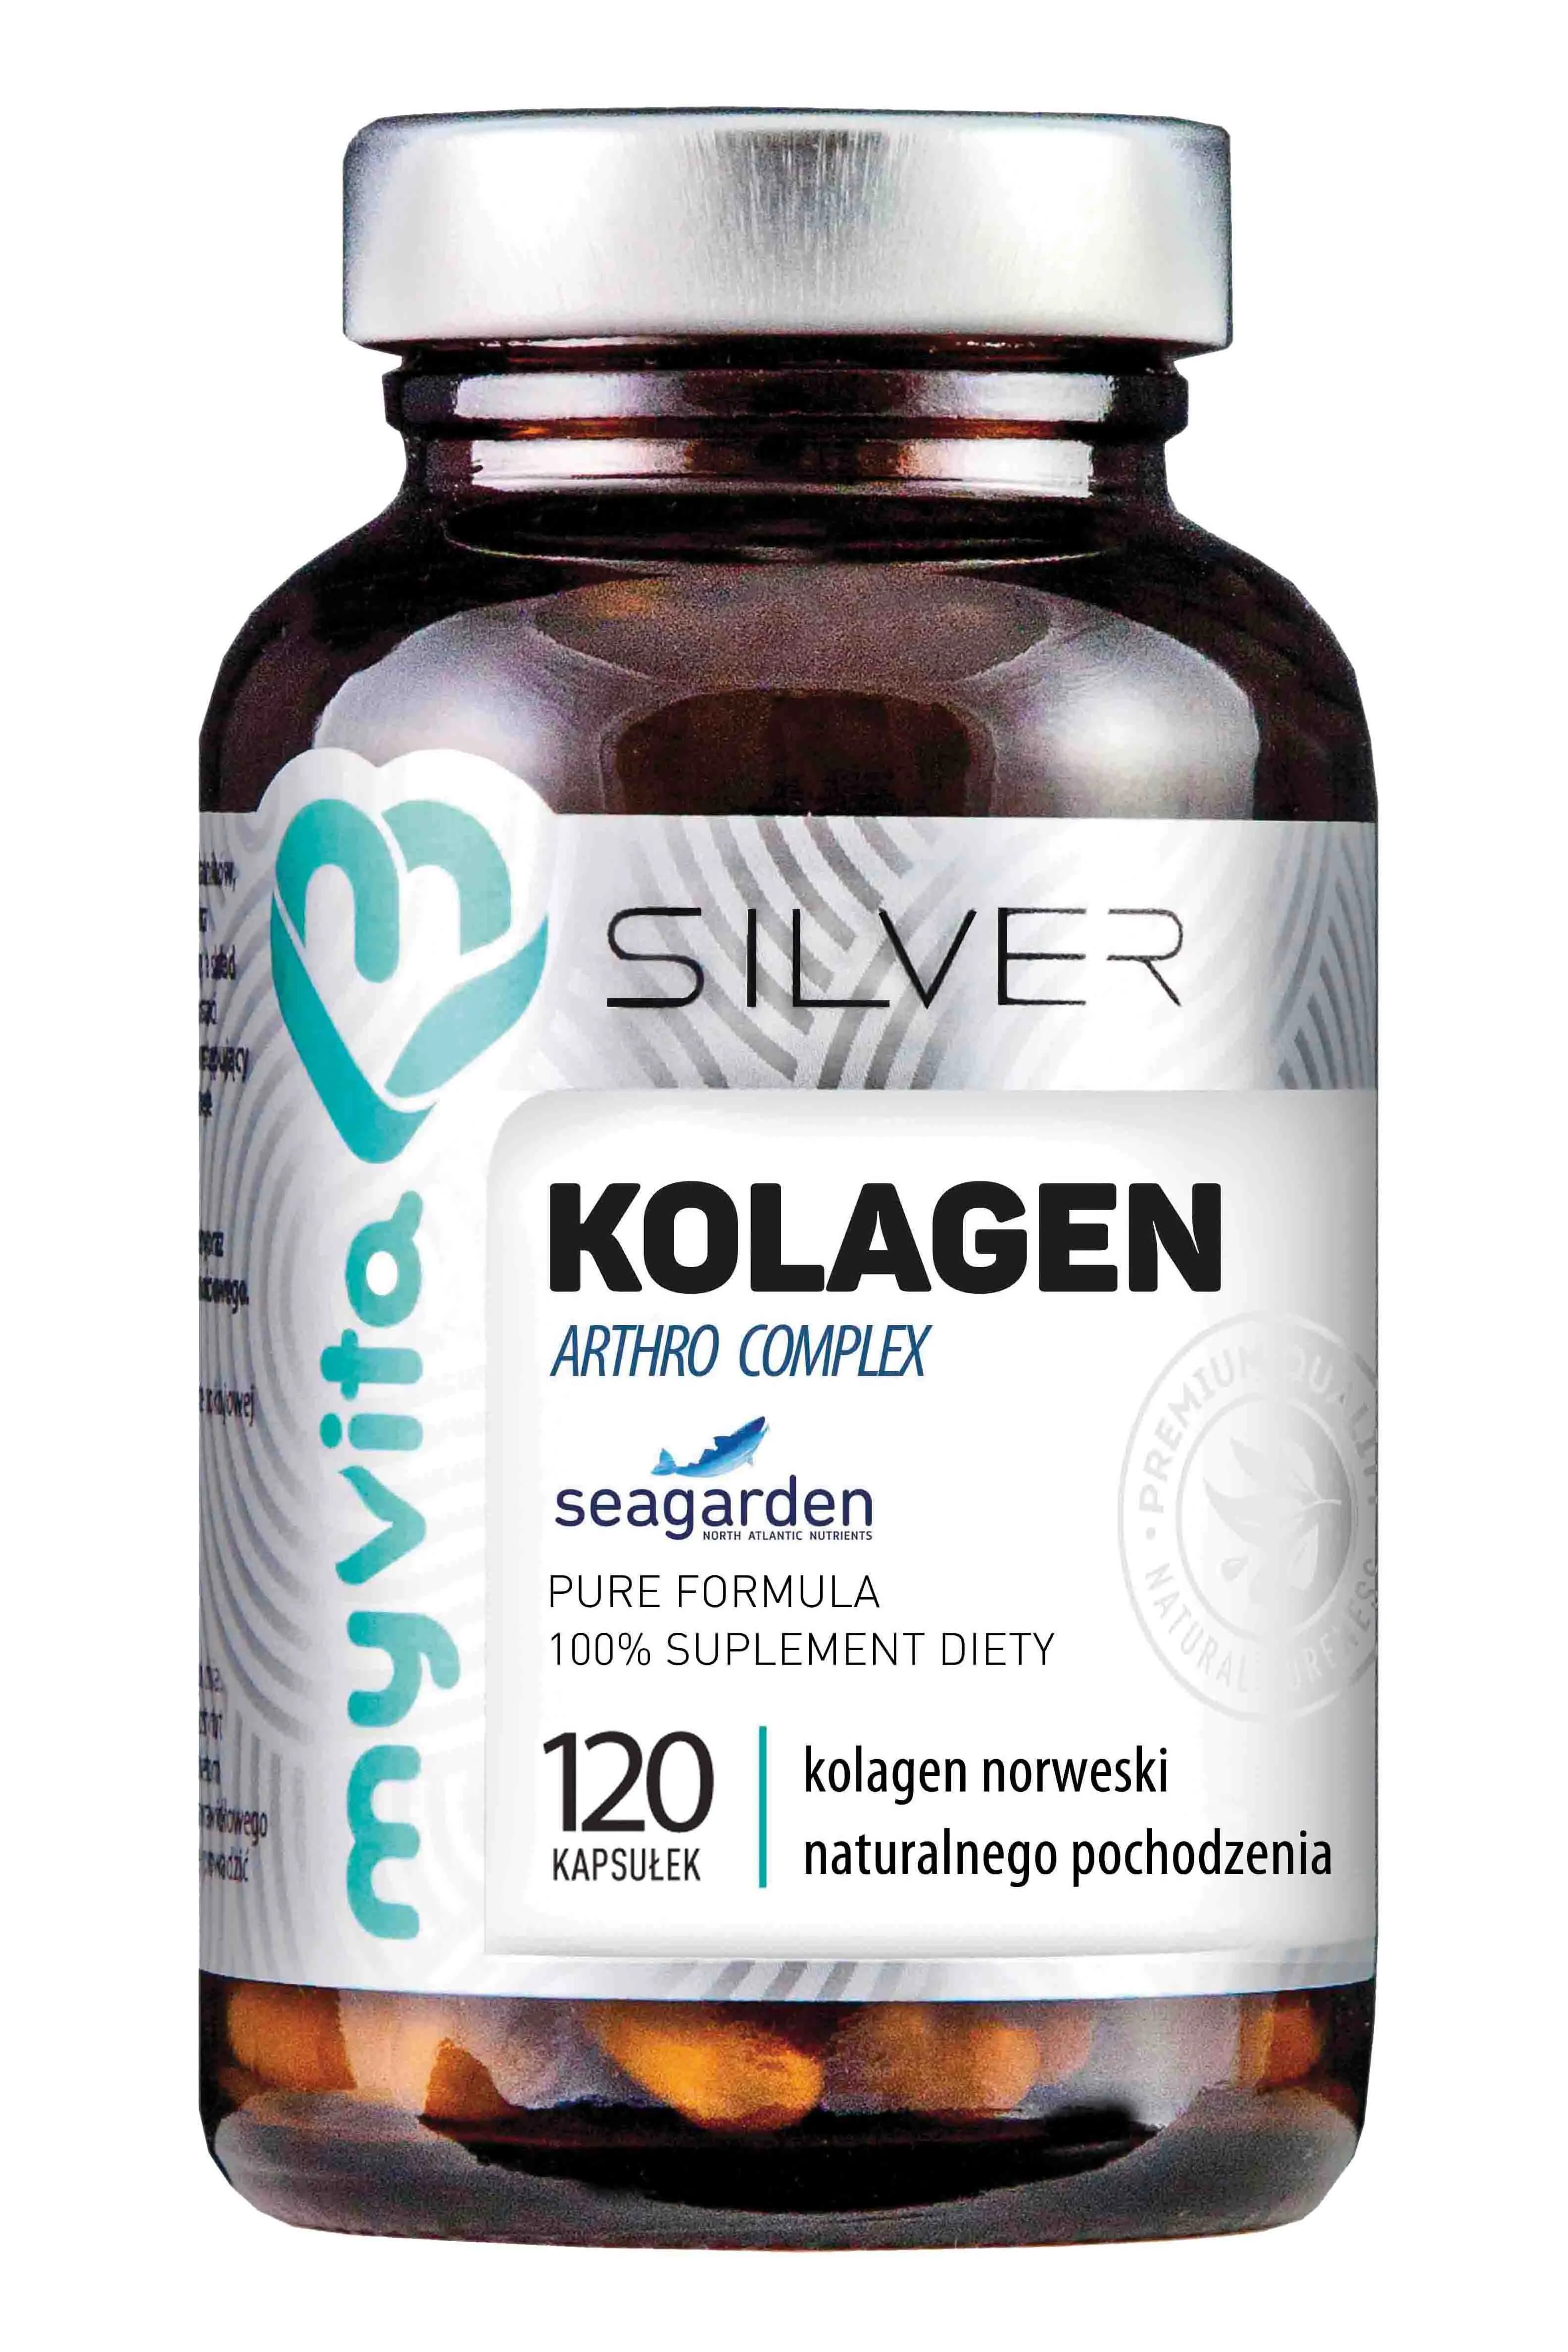 Myvita silver kolagen arthro, suplement diety, 120 kapsułek